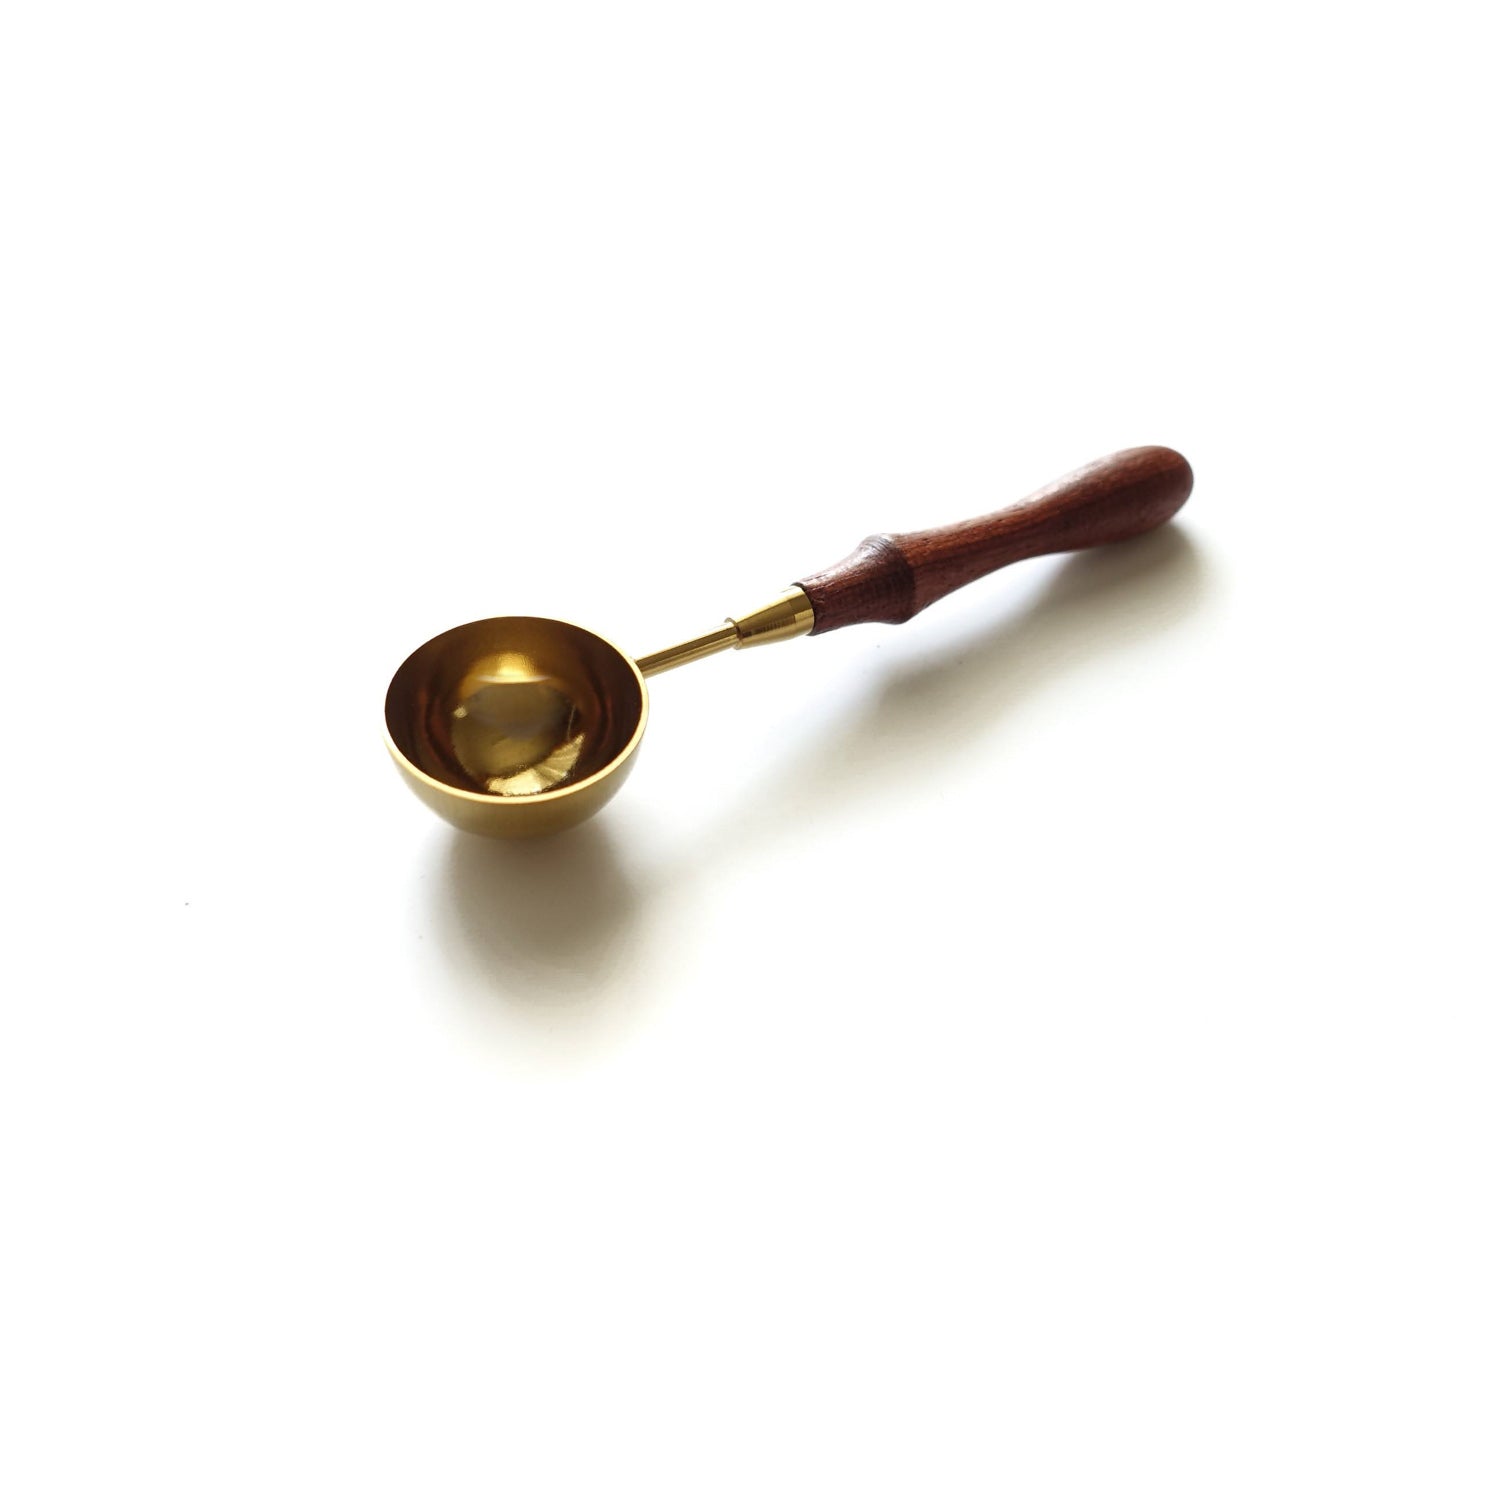 Premium gold wooden handle wax seal spoon Australia